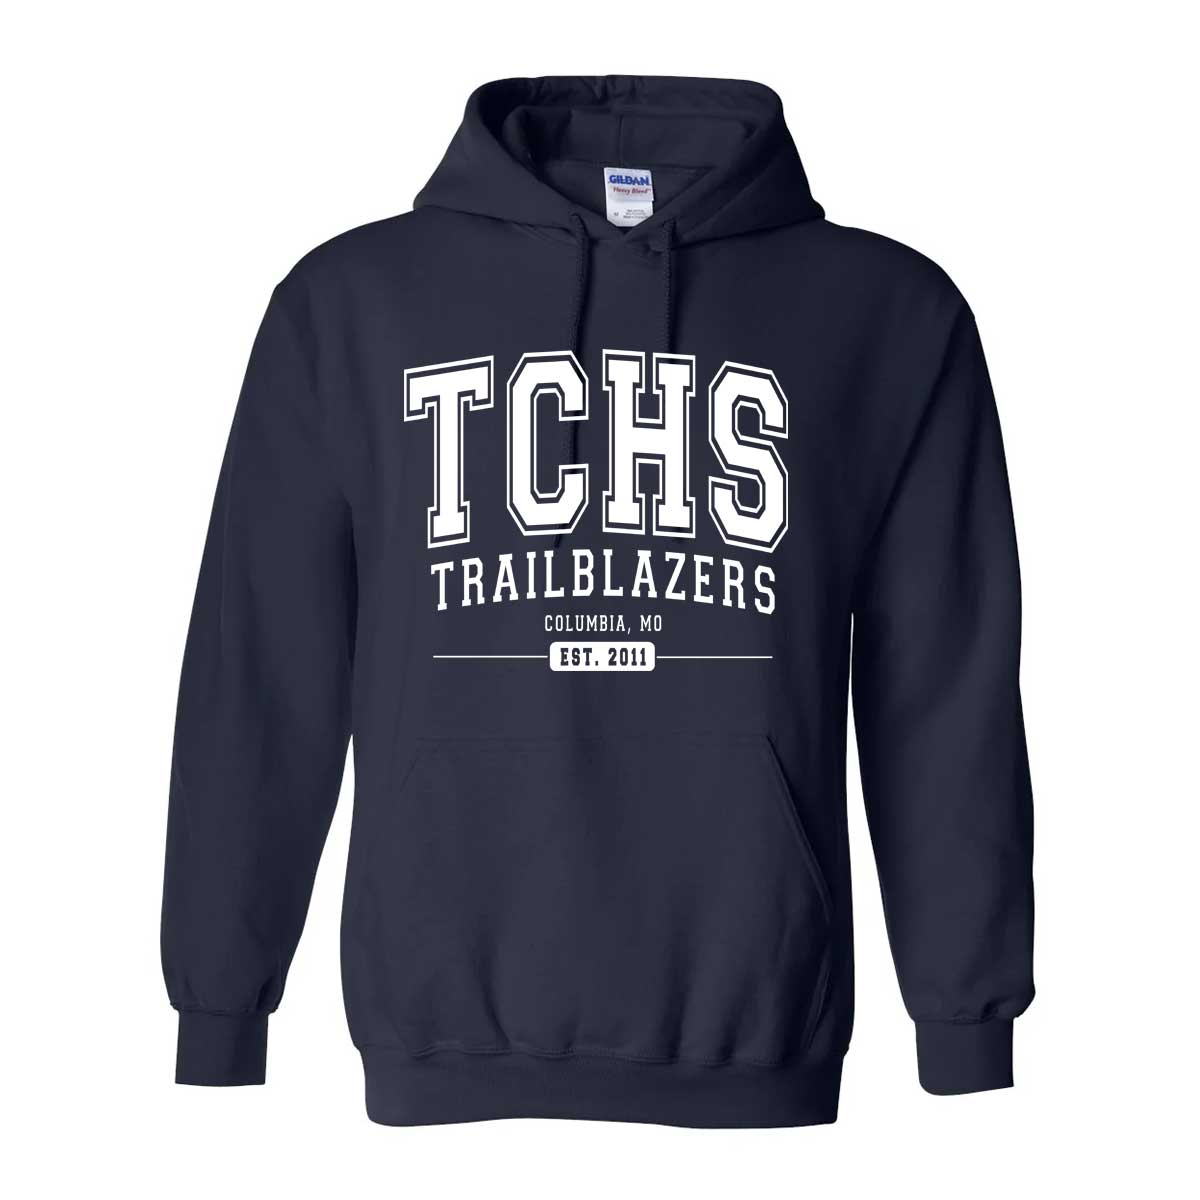 TCHS Trailblazers Hooded Sweatshirt - Navy